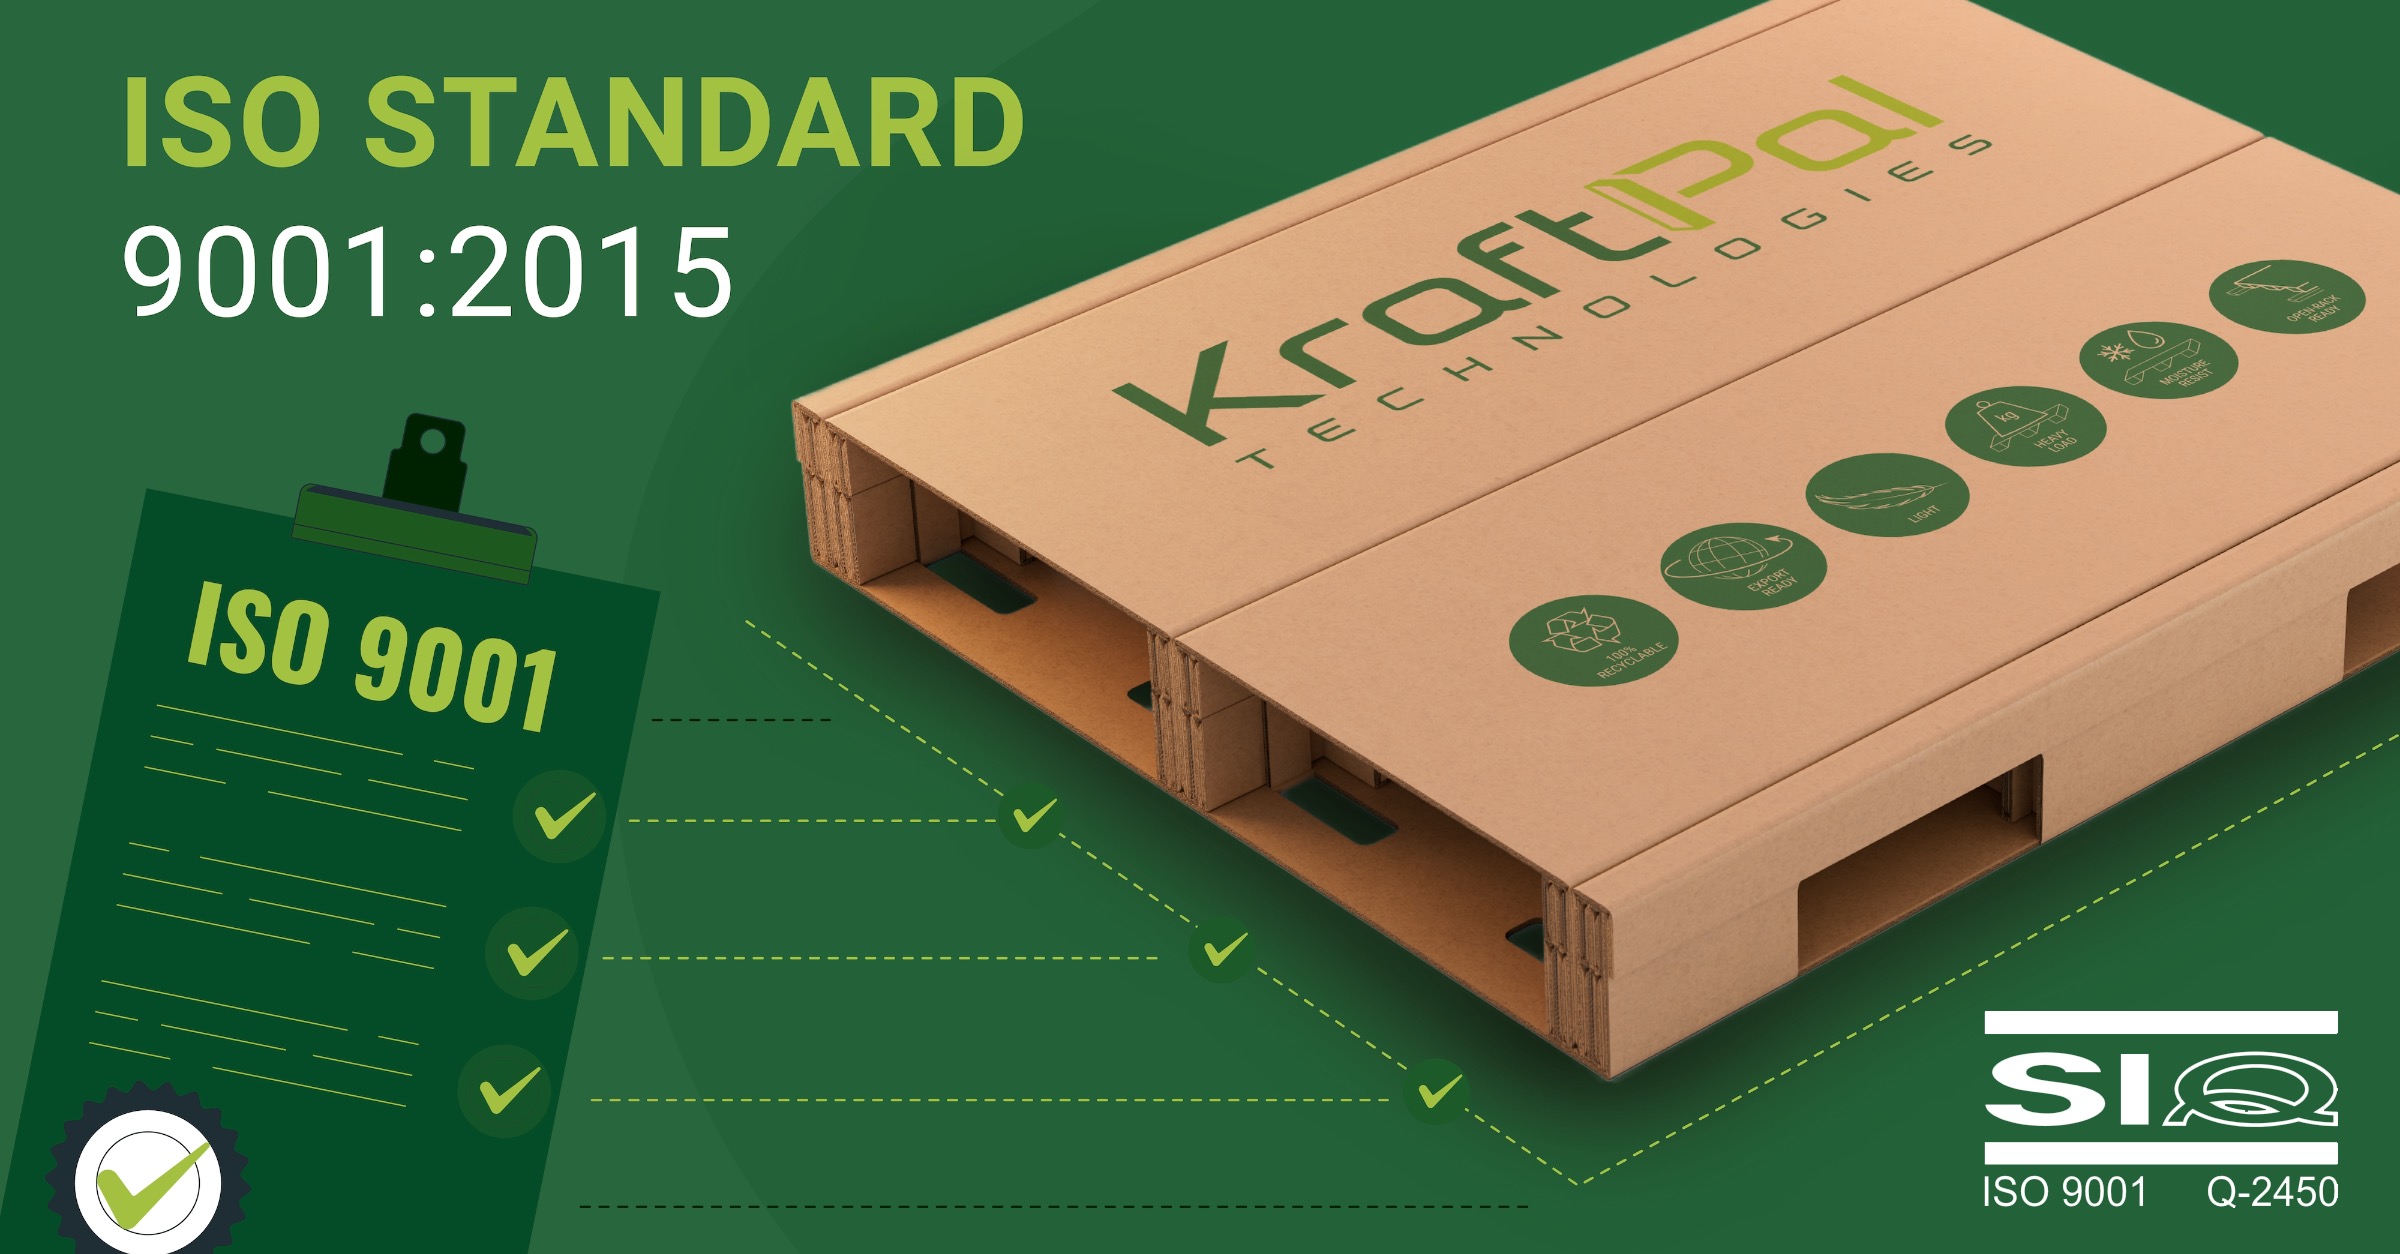 KraftPal Technologies is ISO 9001 certified company